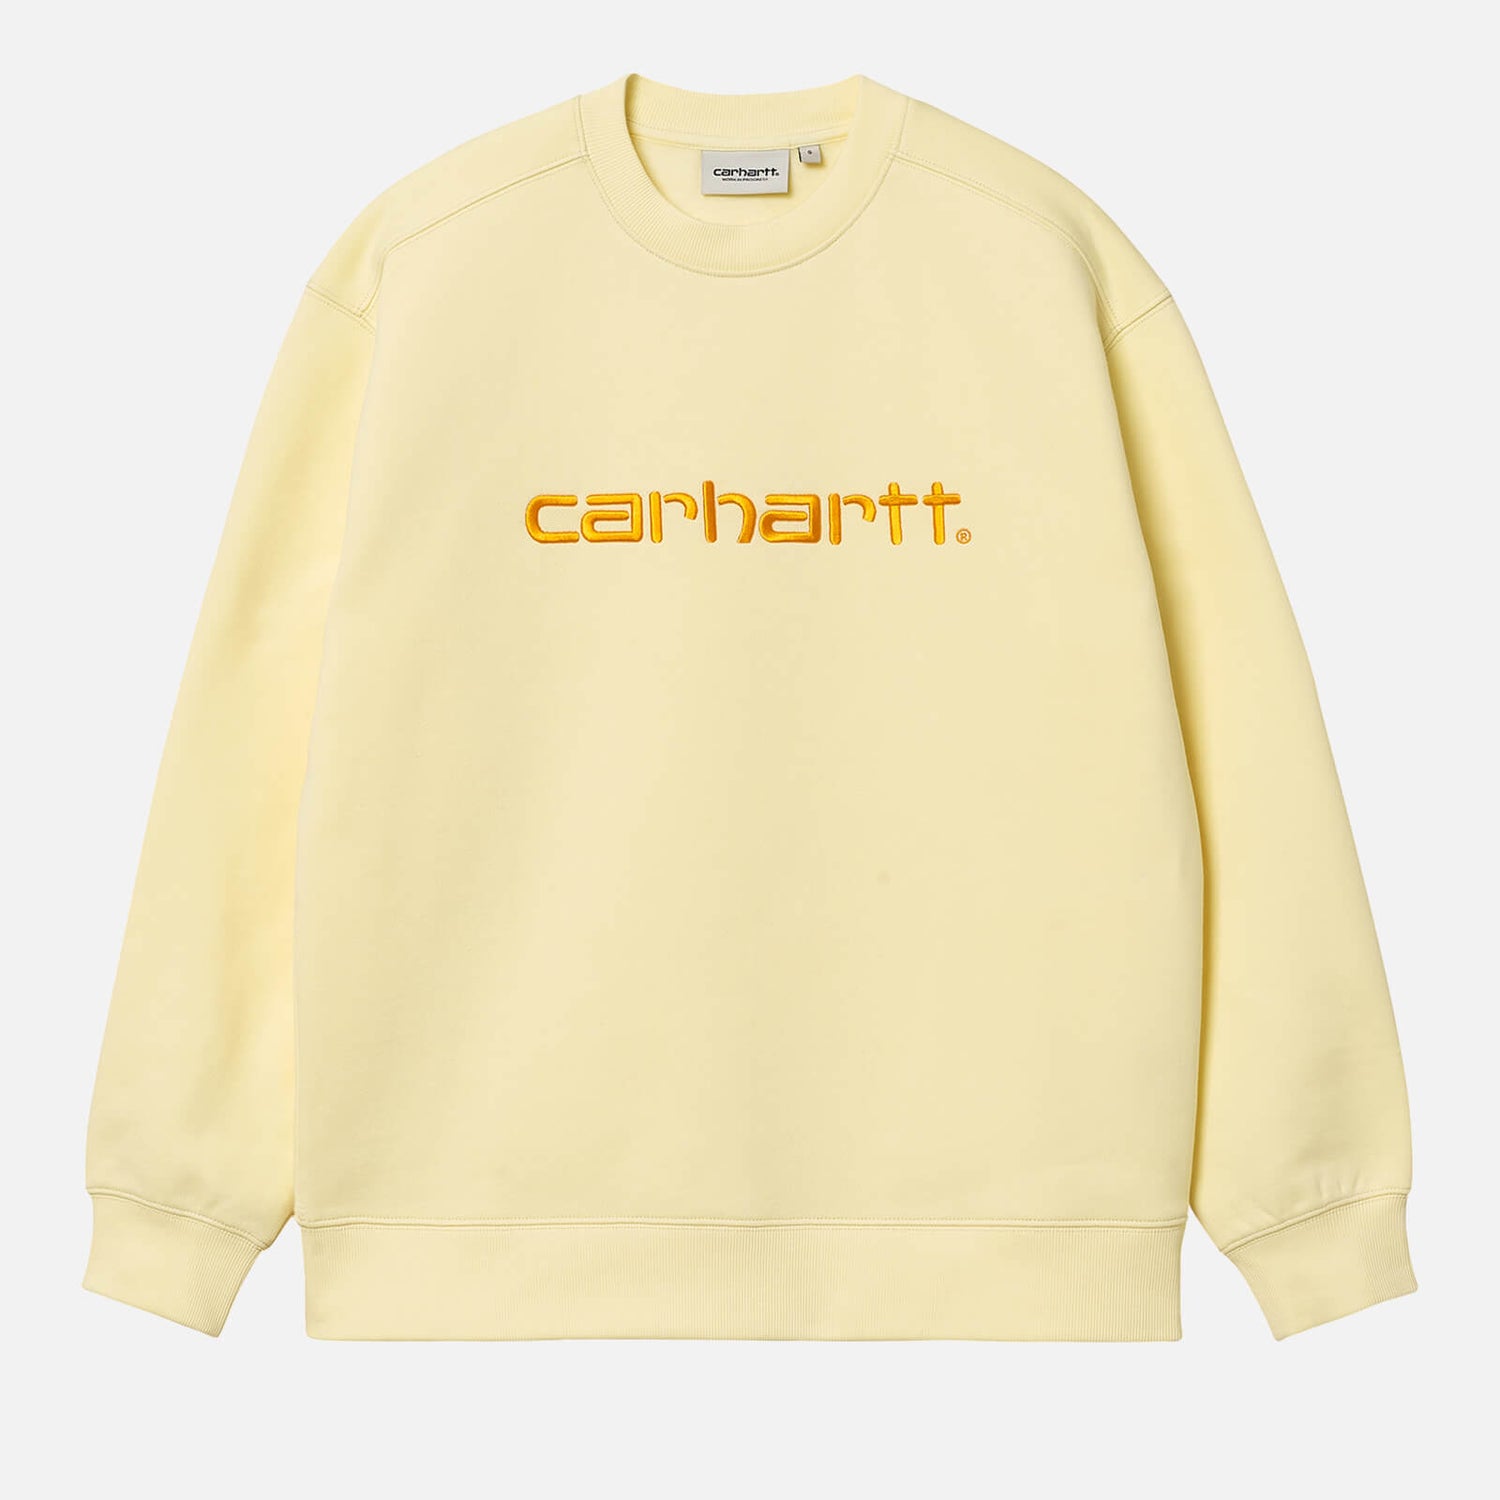 Carhartt WIP Women's Carhartt Sweatshirt - Soft Yellow/Popsicle